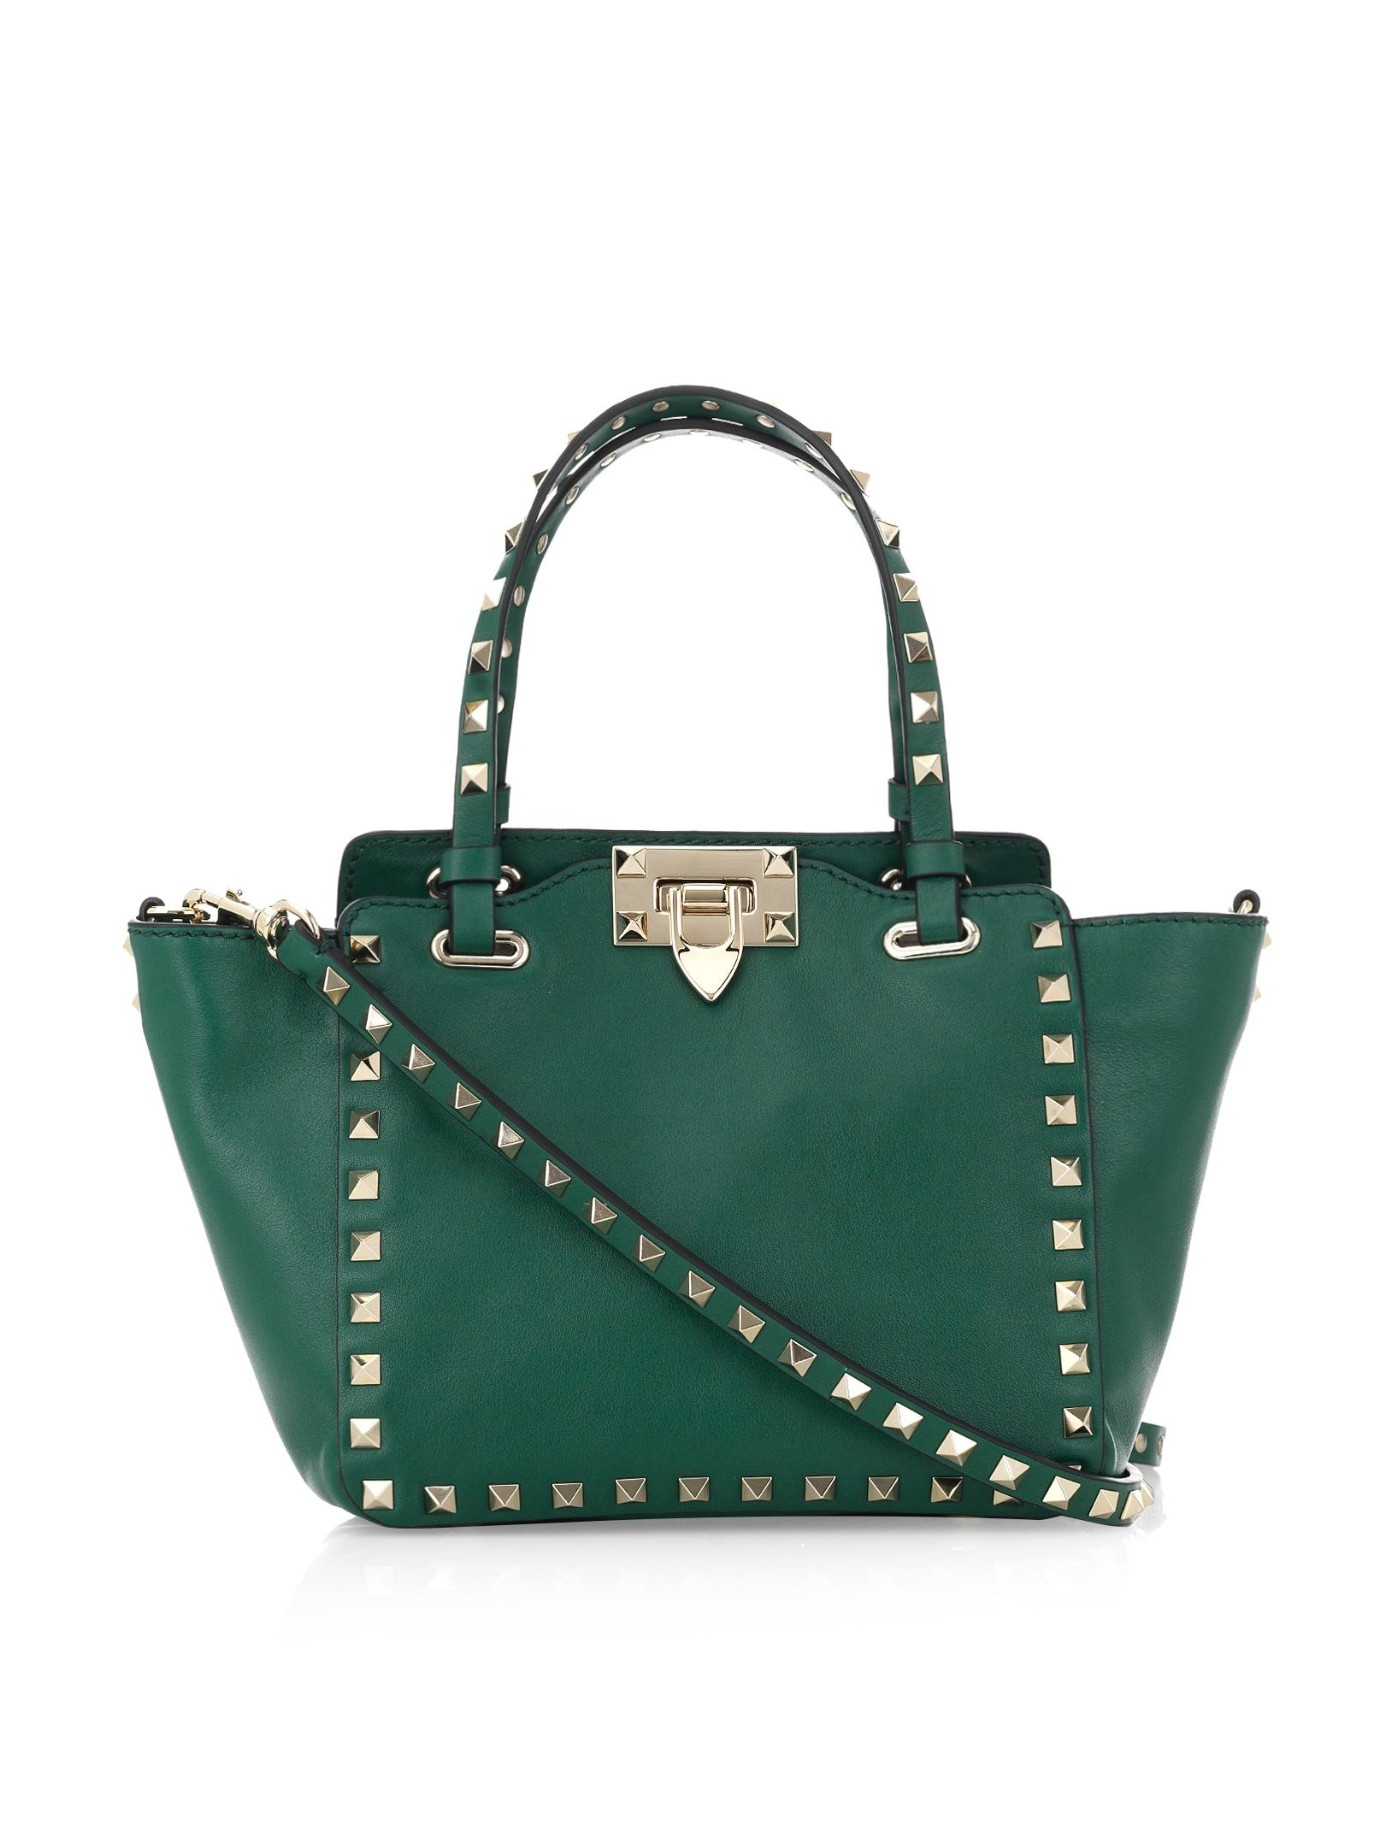 Valentino Rockstud Mini Leather Cross-body Bag in Green - Lyst